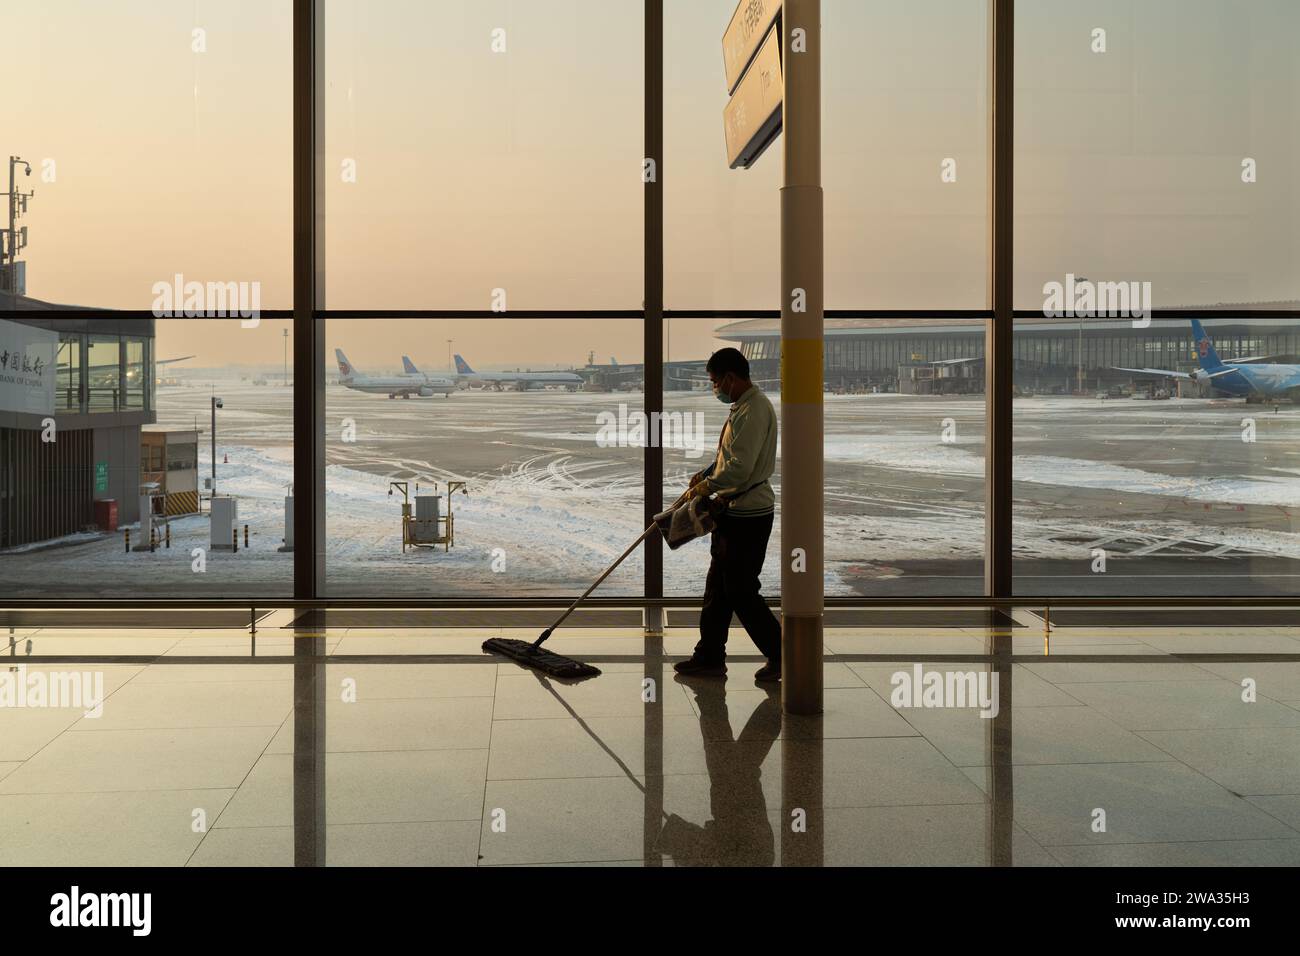 Beijing Daxing International Airport, China Stockfoto